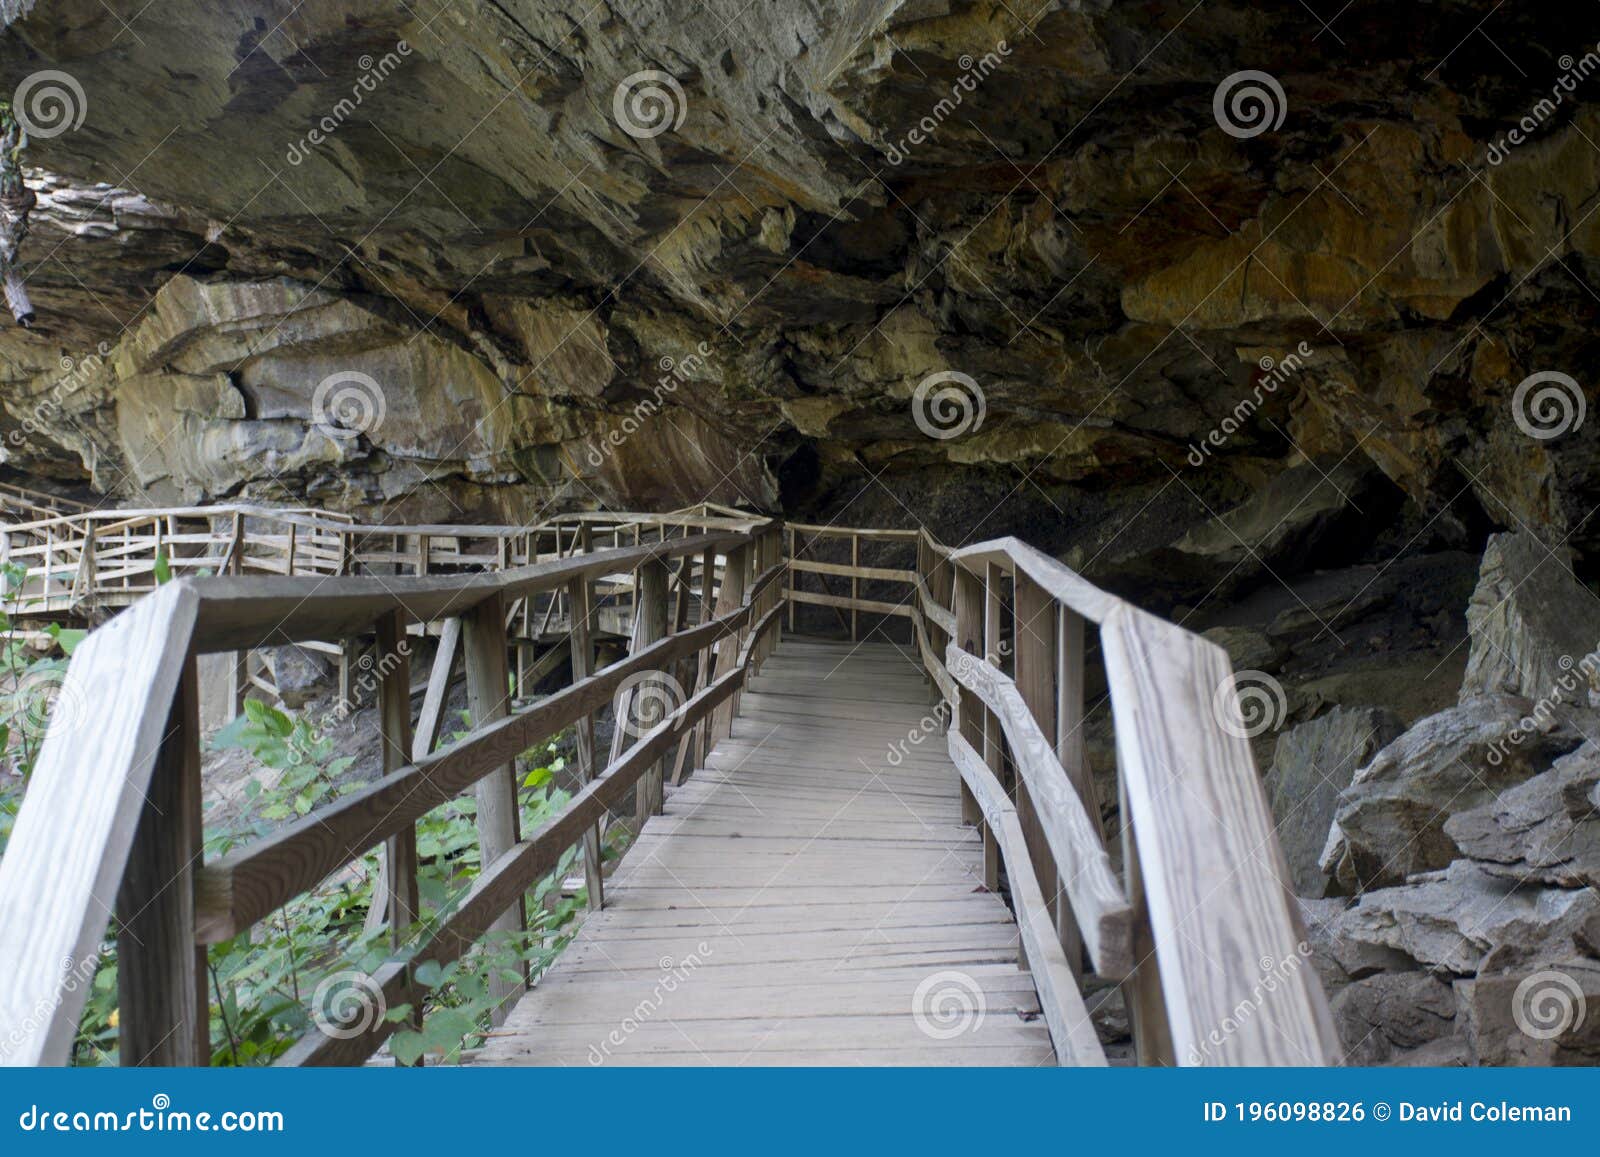 hiking trail boardwalk under rocky overhang